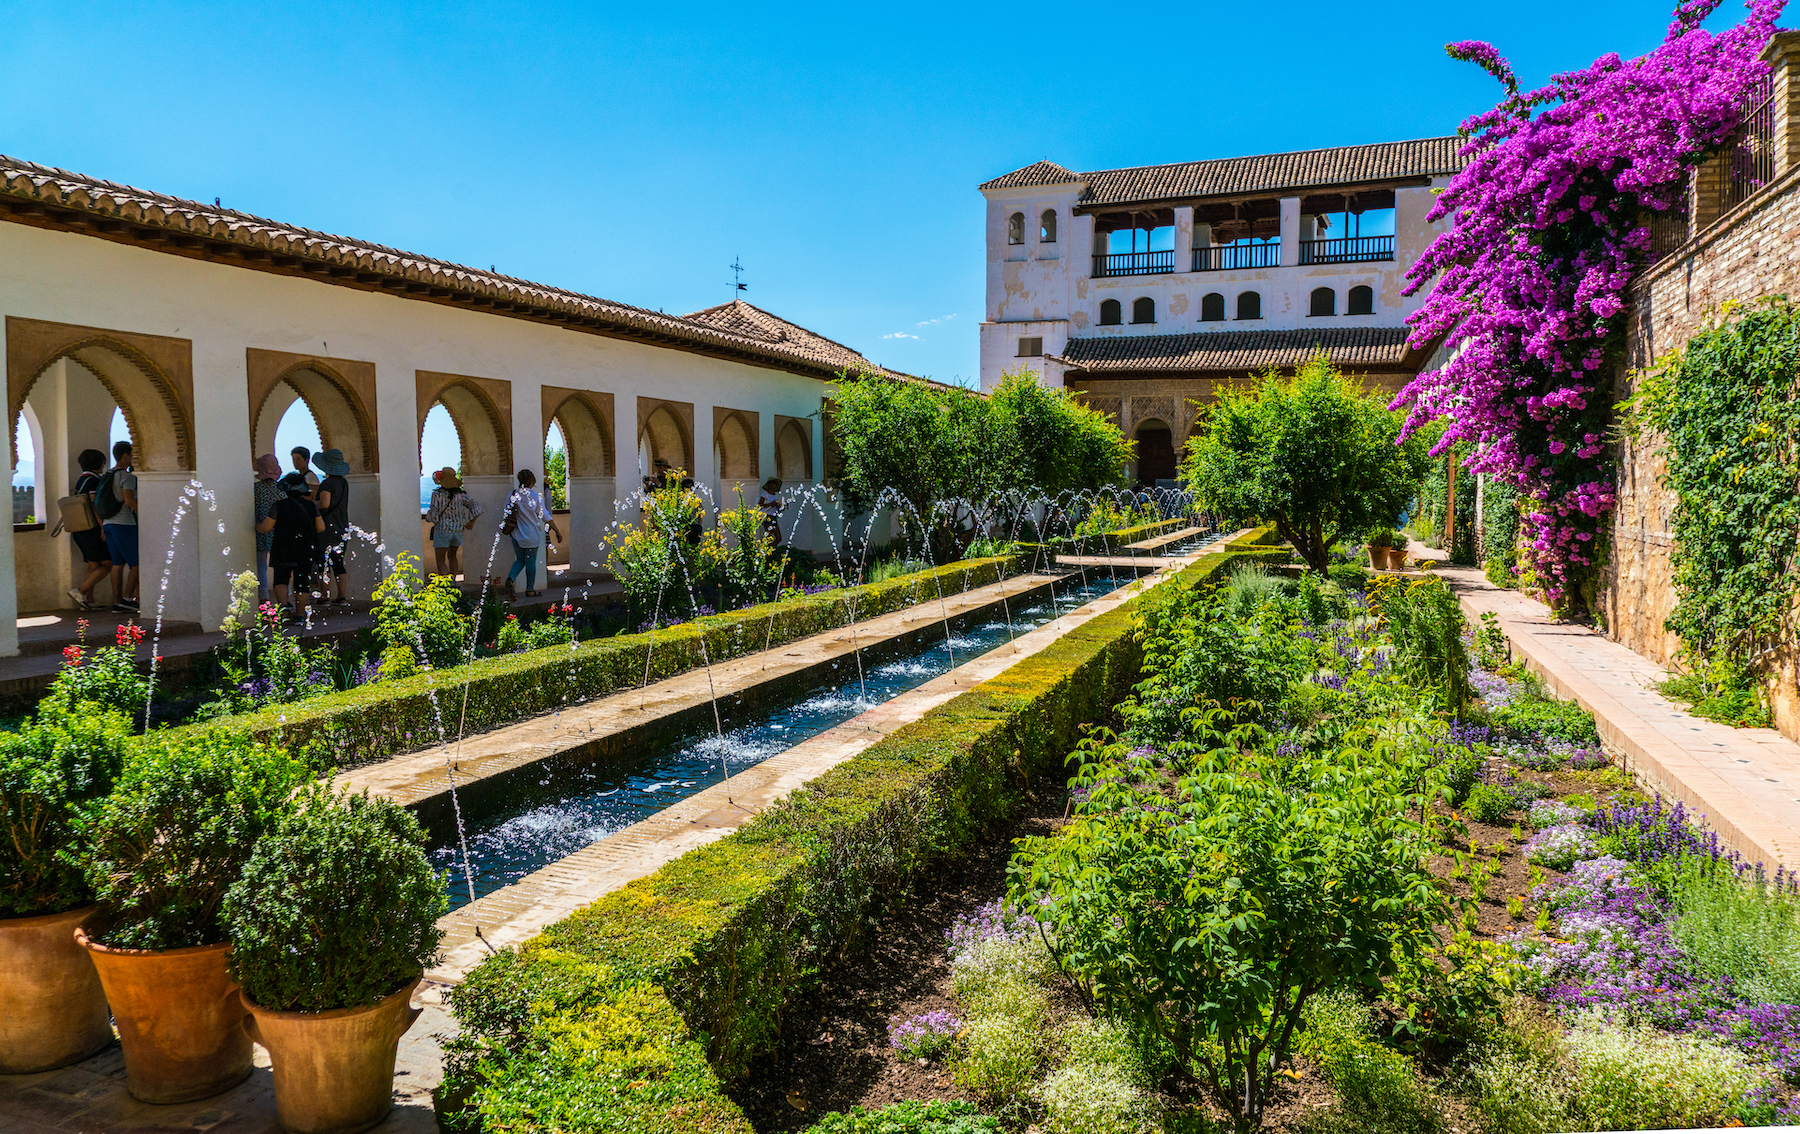 Cómo pasar un fin de semana perfecto en hermosa Granada, España - 7